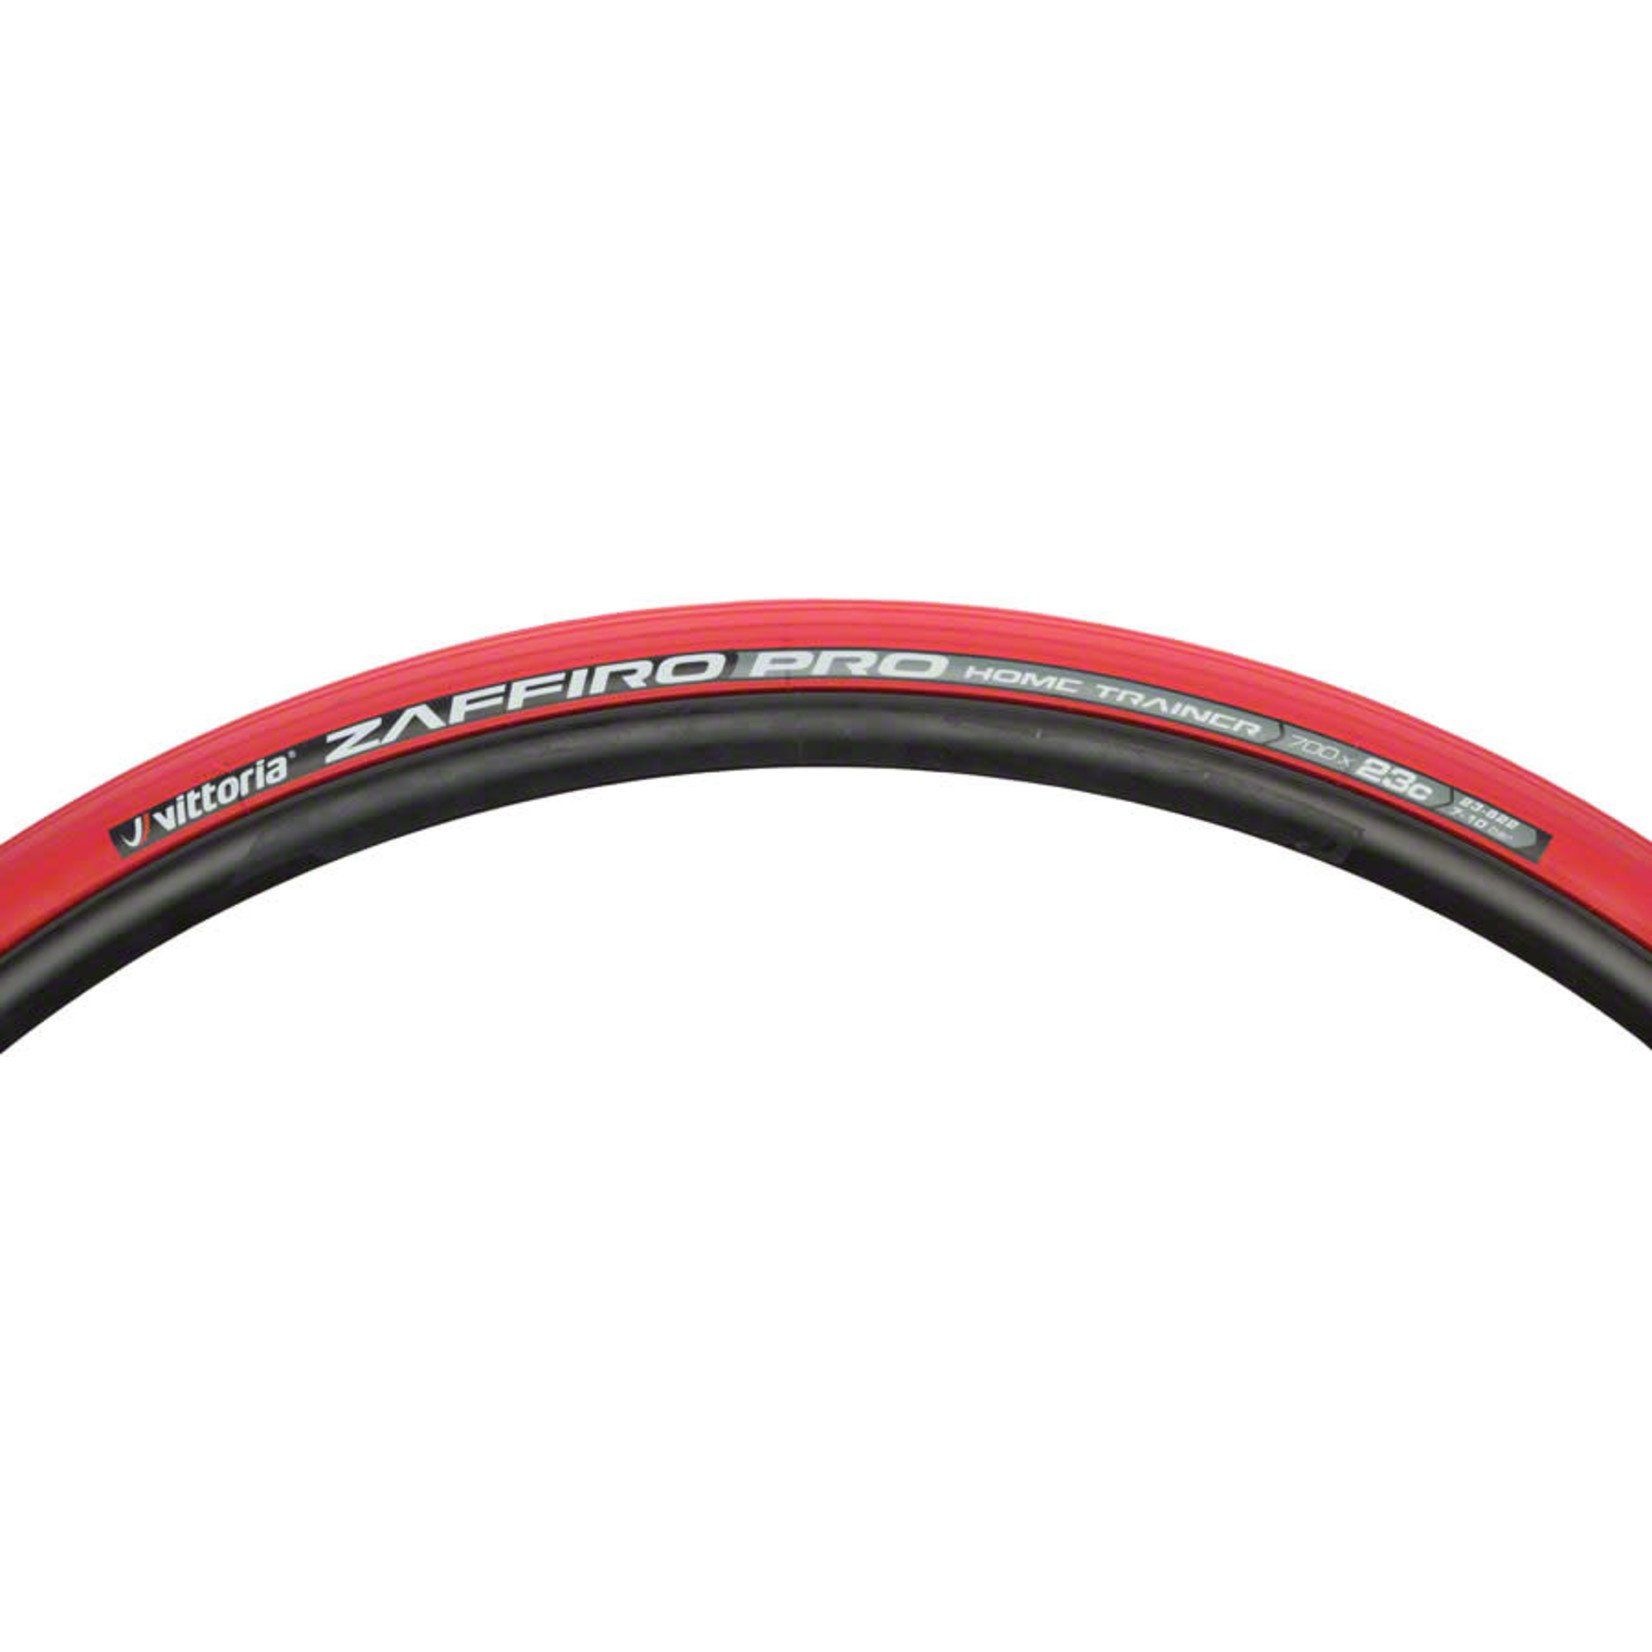 Vittoria Vittoria Zaffiro Pro Home Trainer Tire: Folding Clincher, 700x23, Red